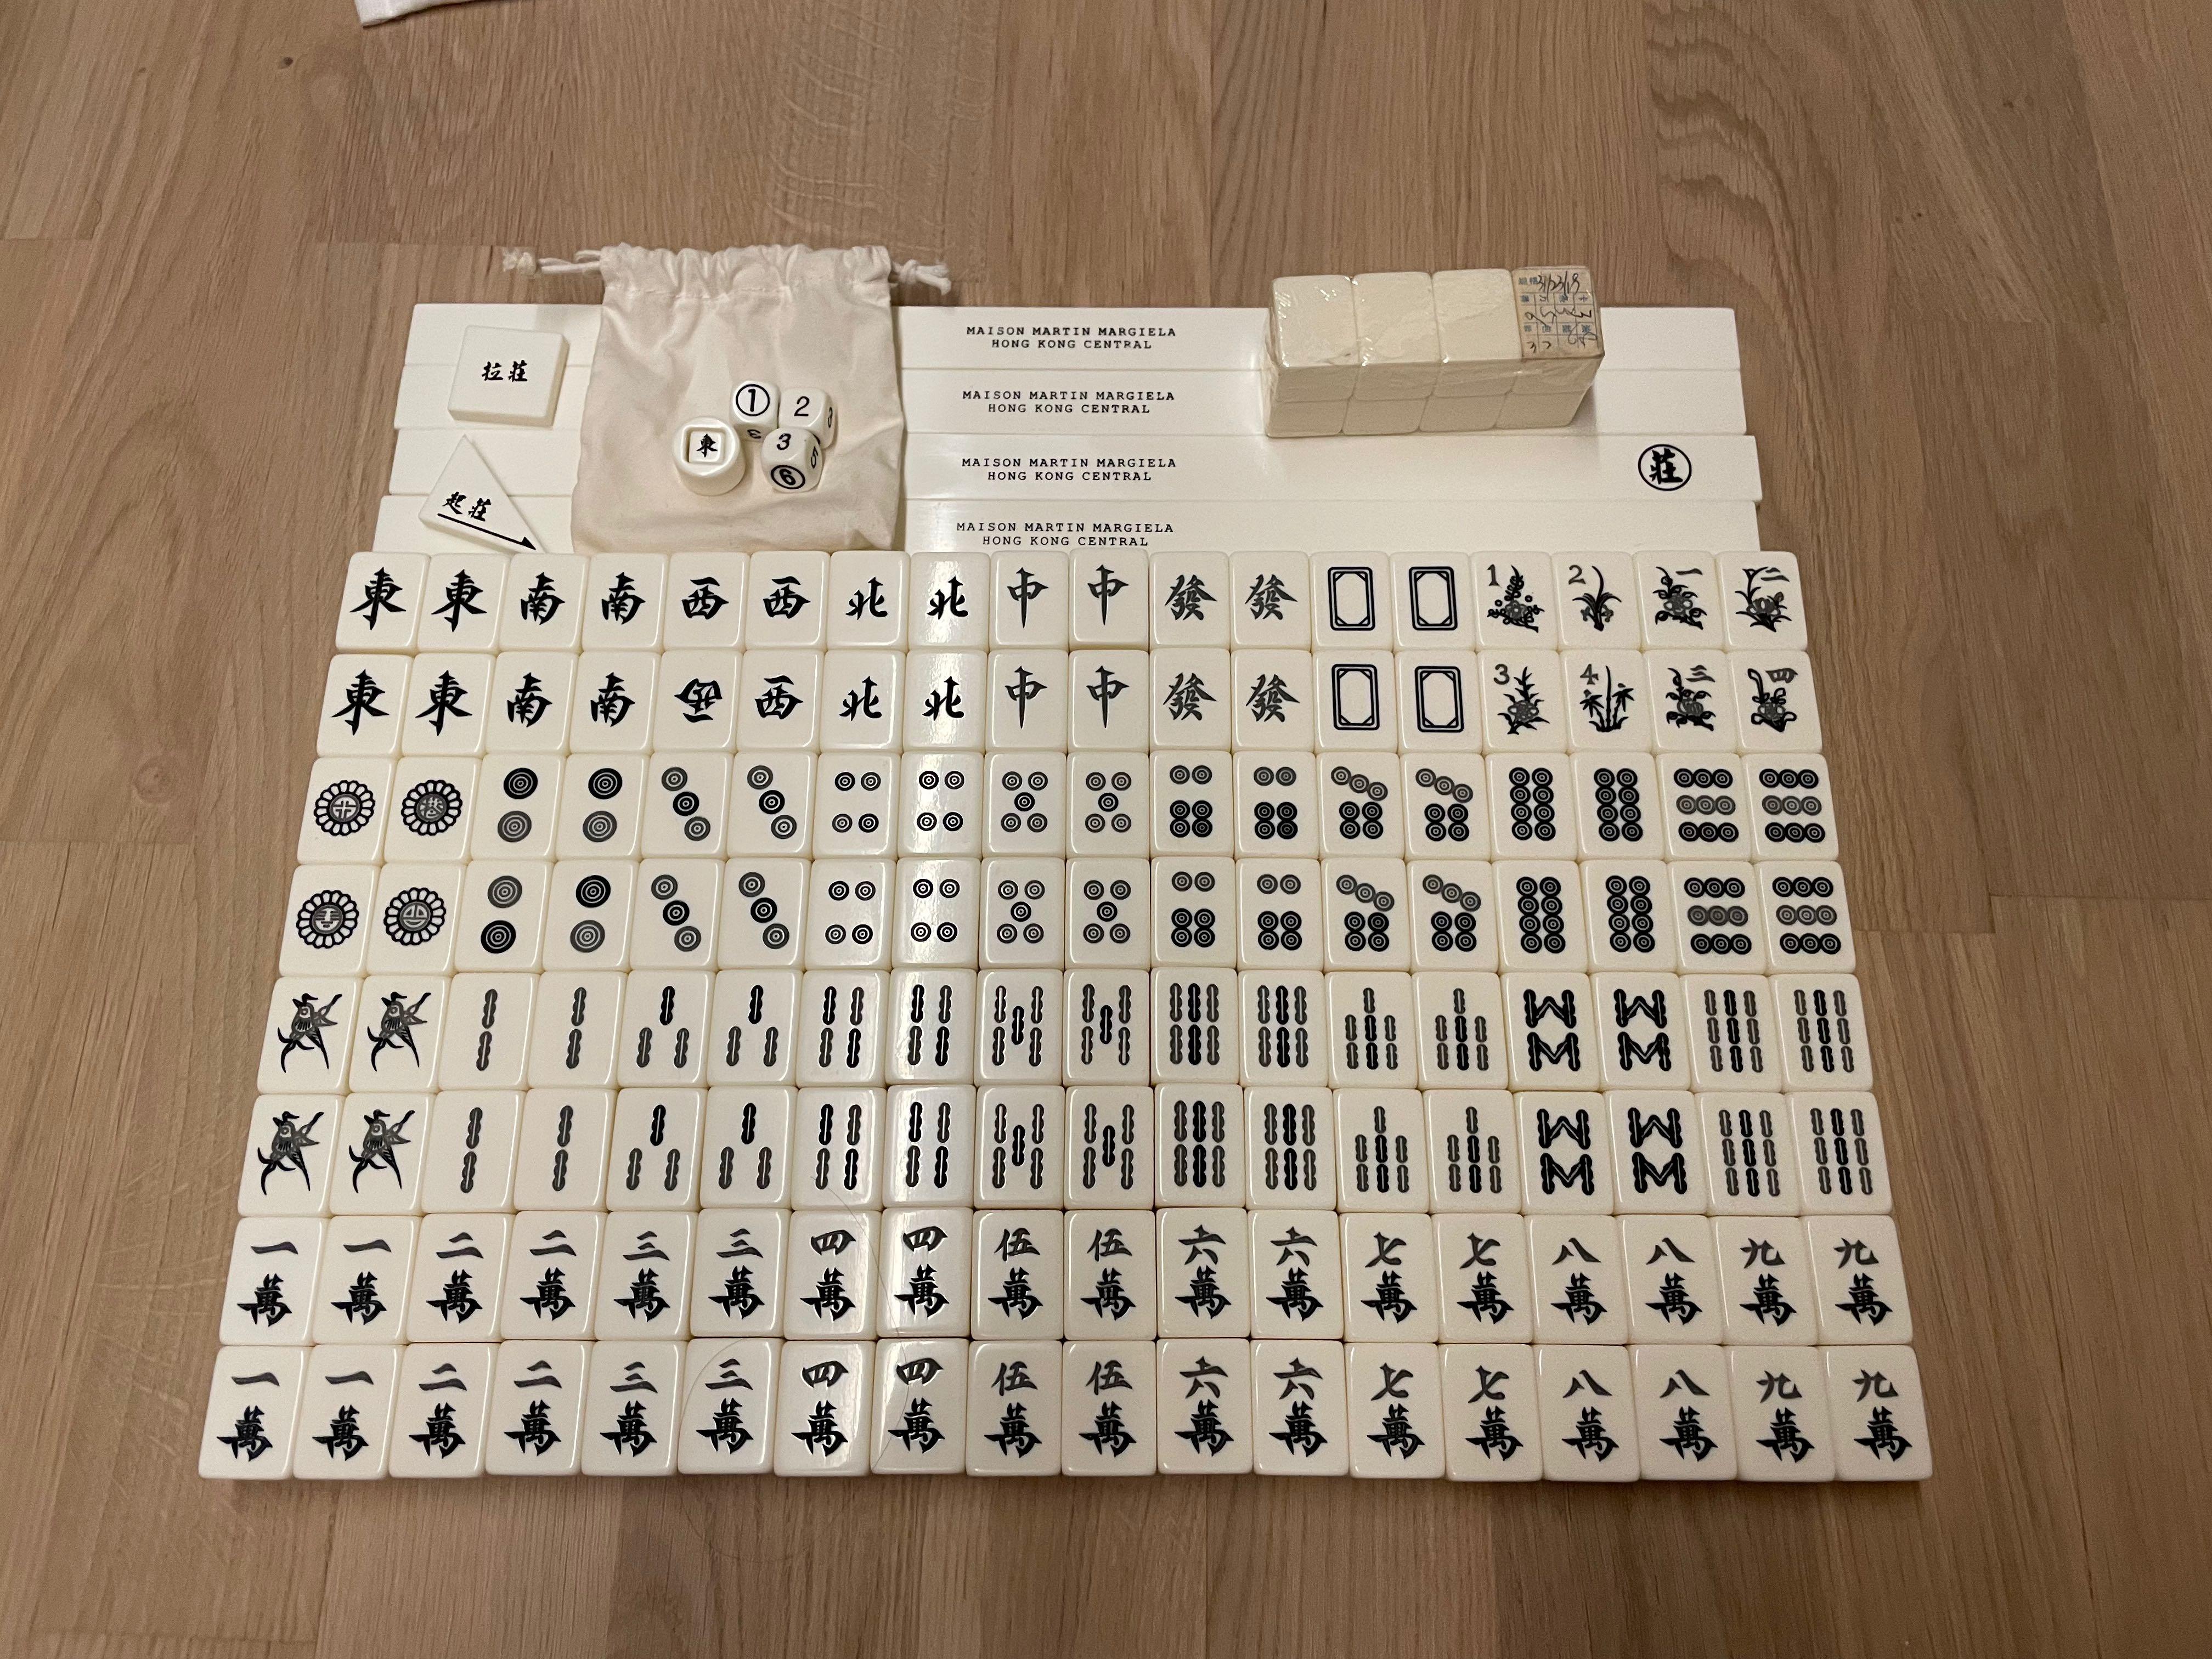 Mahjong Set by Maison Martin Margiela